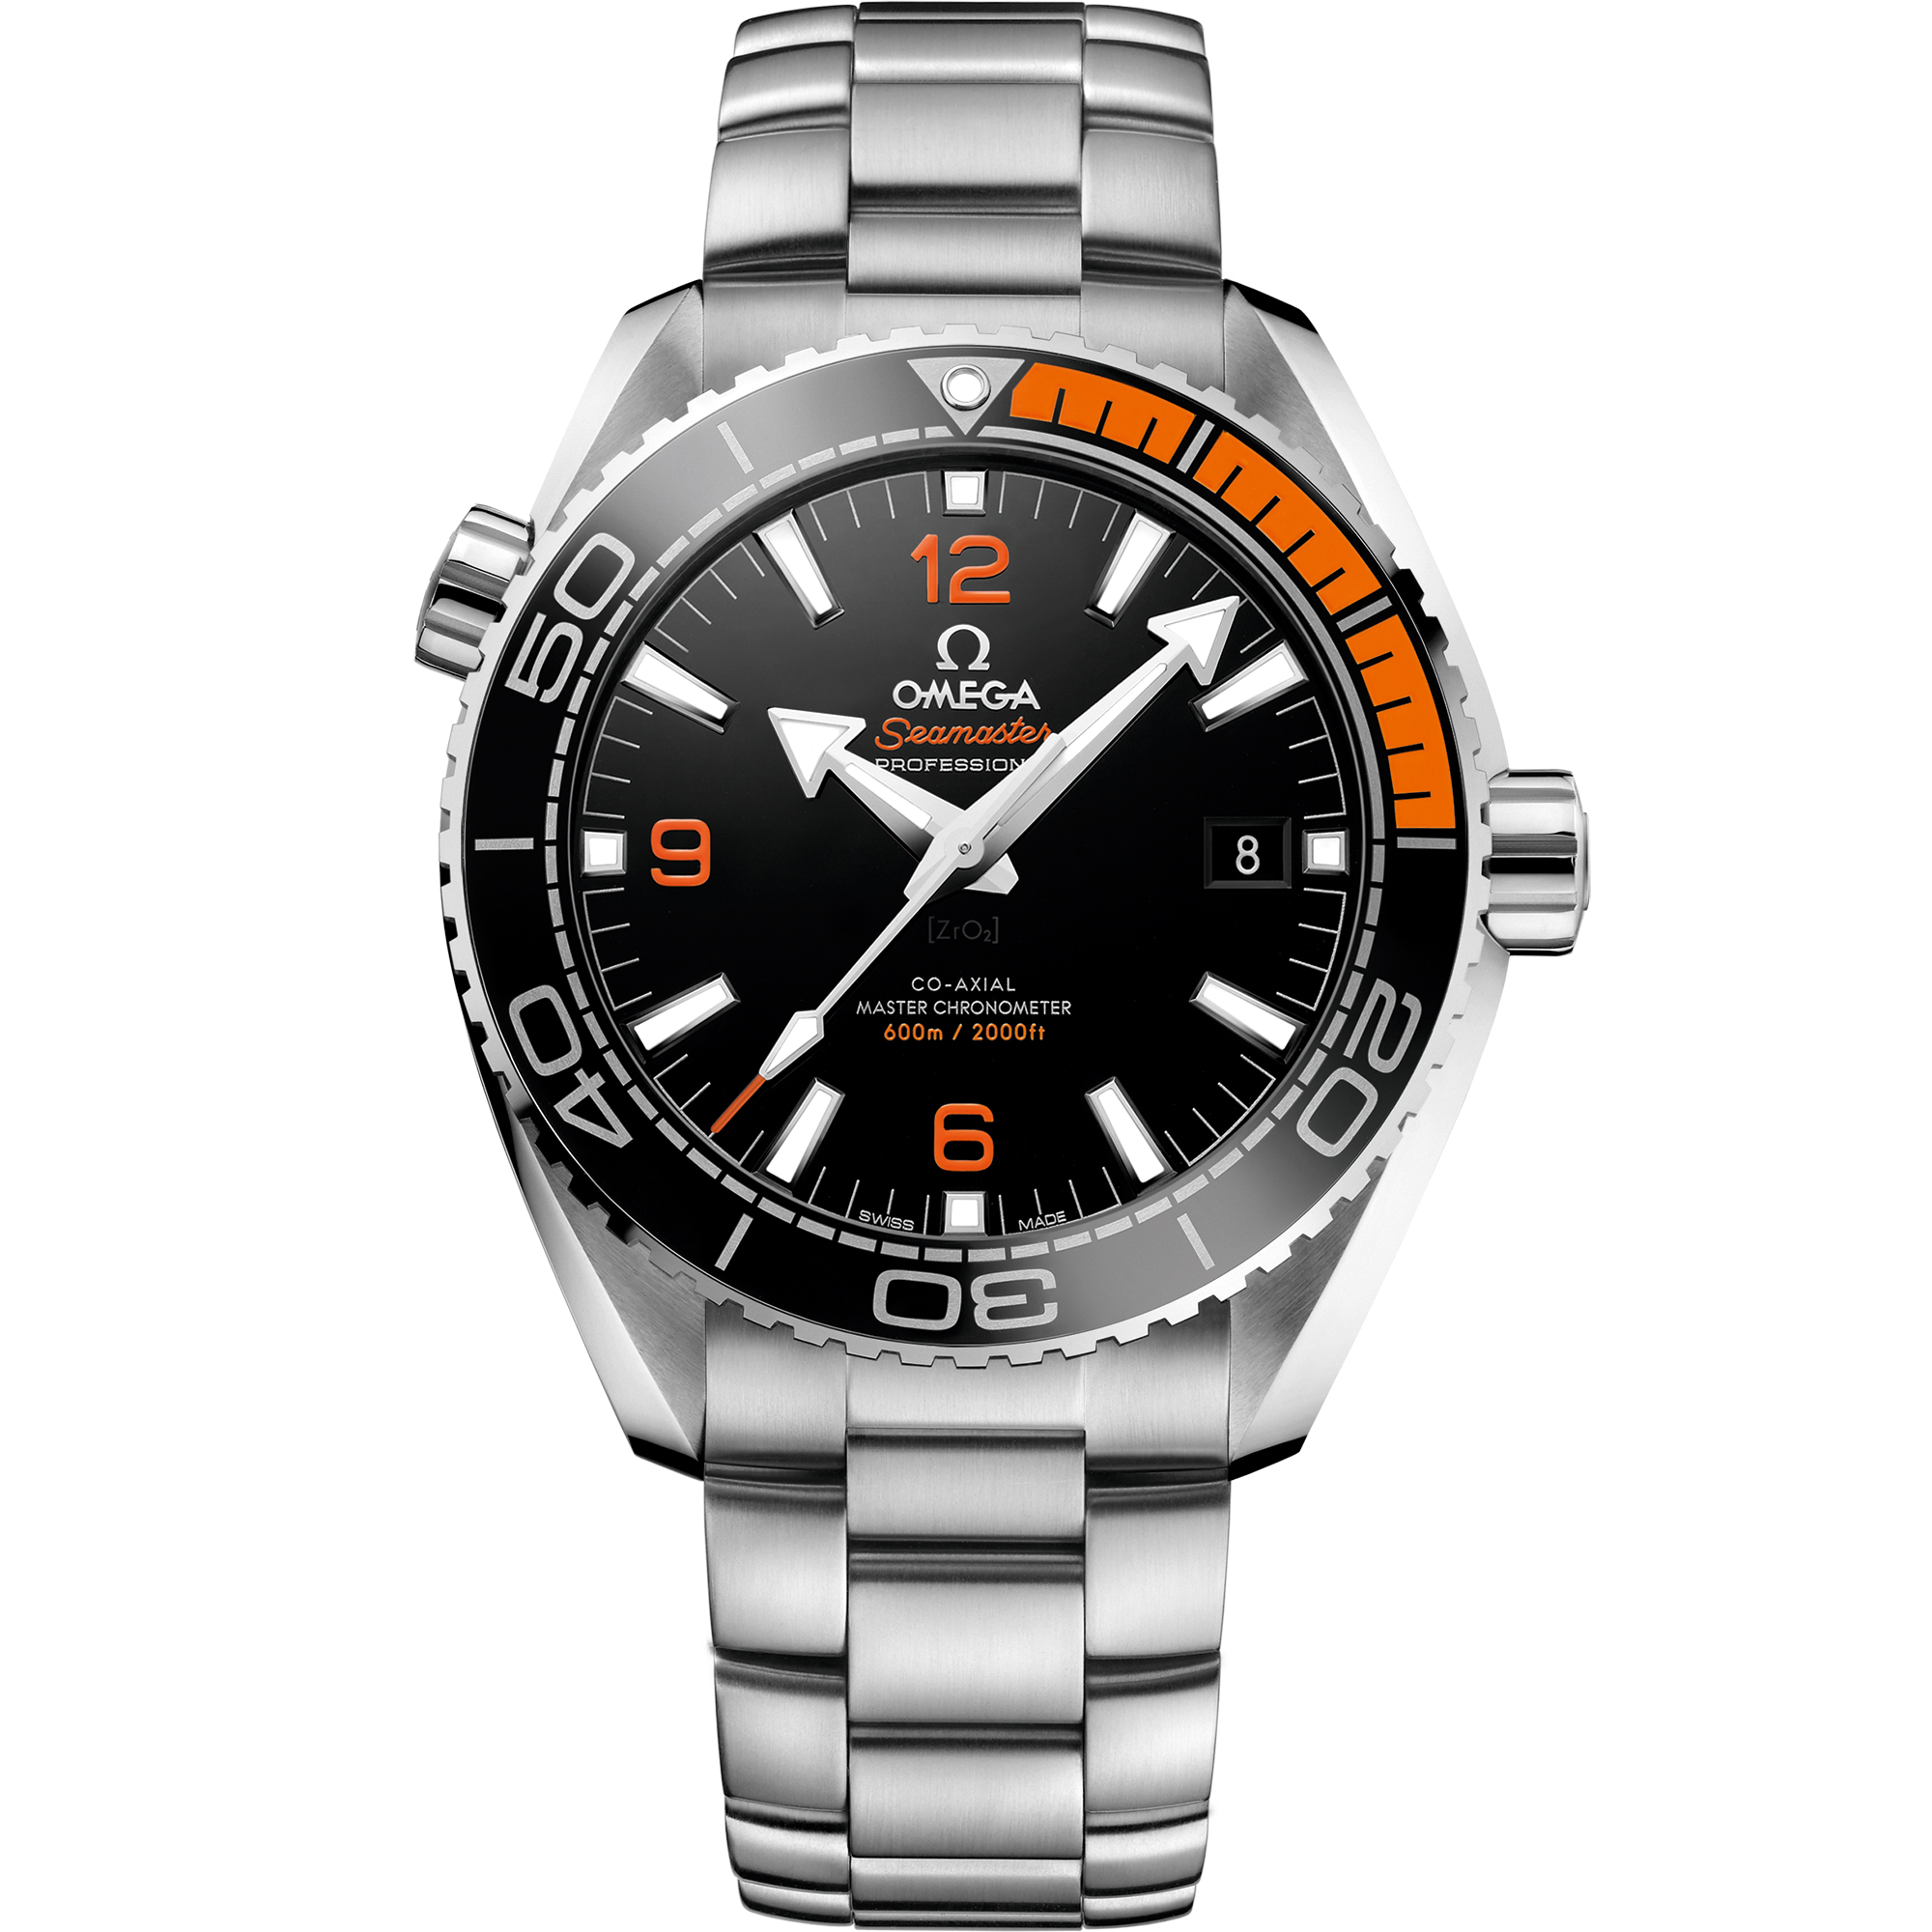 Planet Ocean 600M Seamaster Steel Chronometer Watch 215.30.44.21.01.002